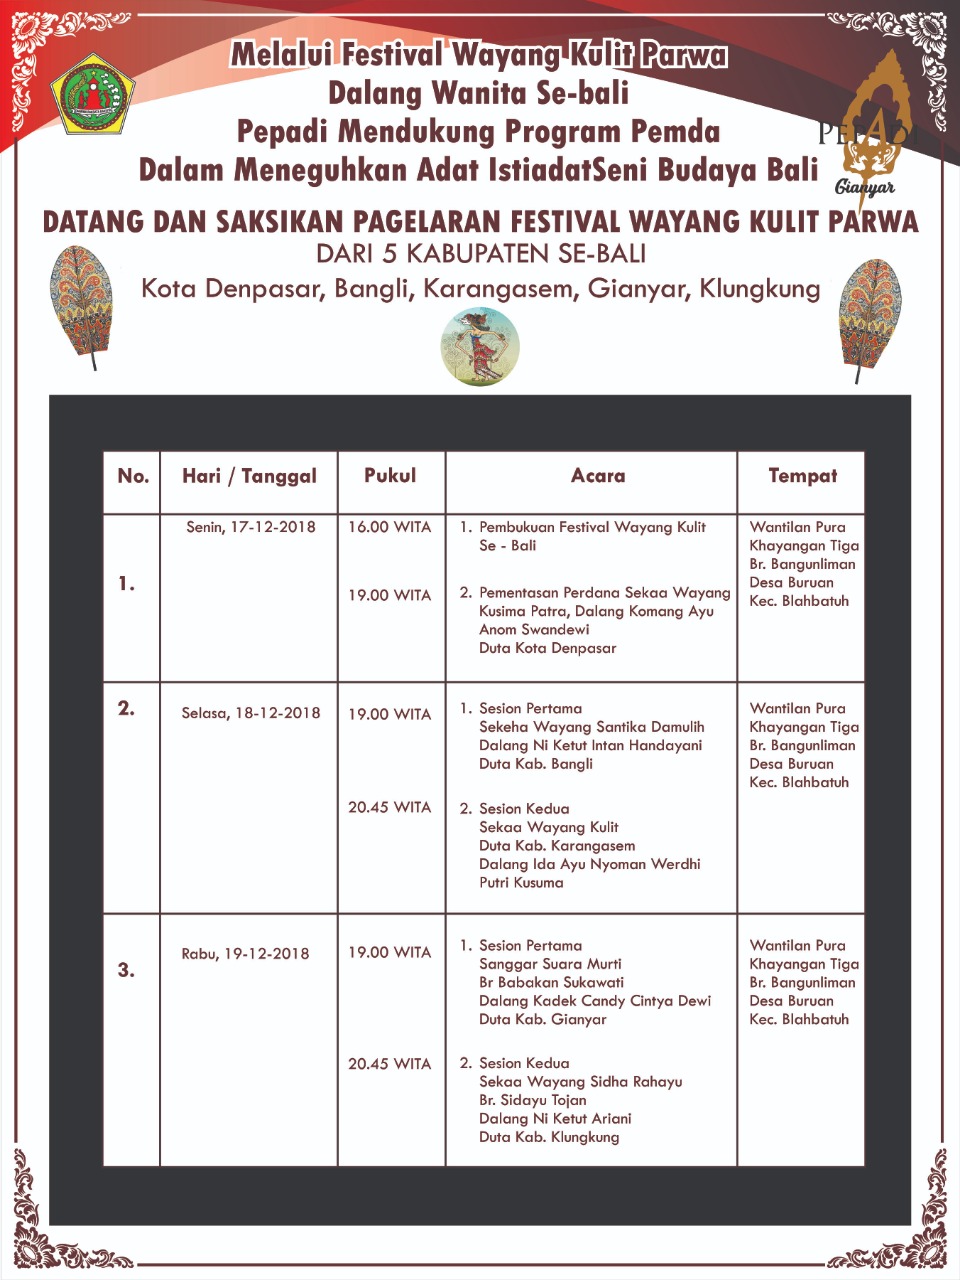 Festival Wayang Kulit Parwa, Dalang Wanita Se-bali